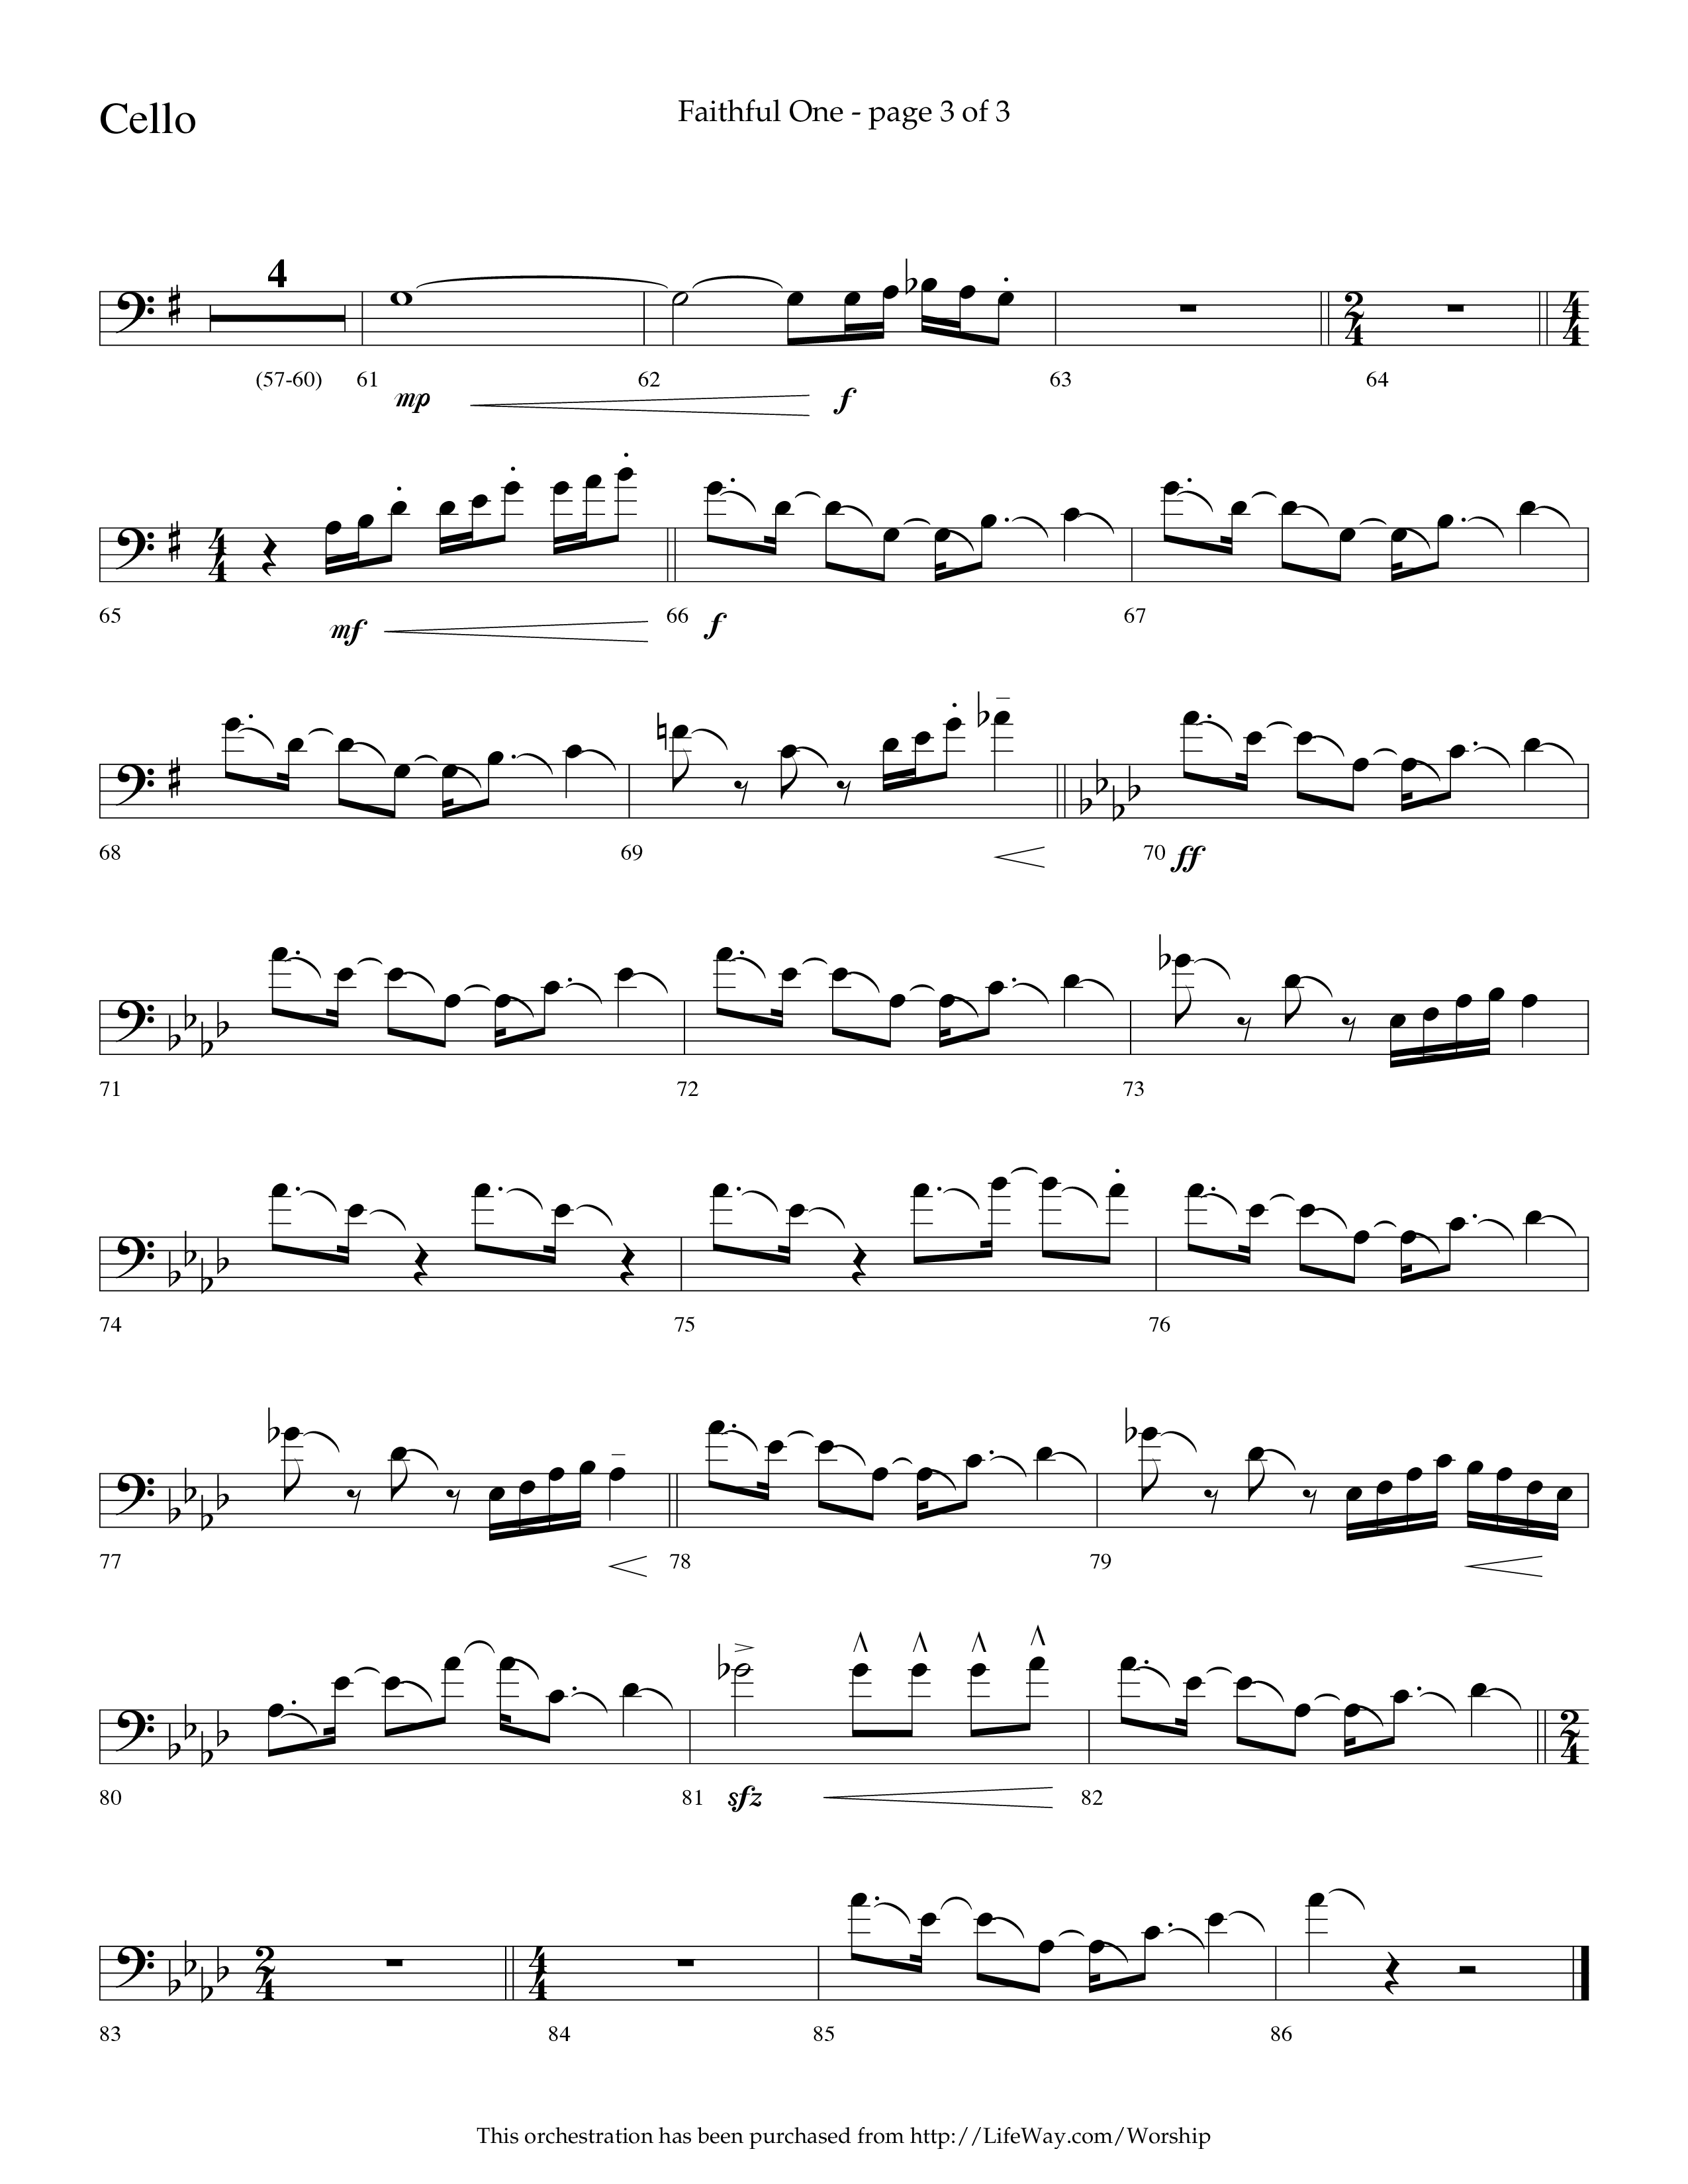 Faithful One (Choral Anthem SATB) Cello (Lifeway Choral / Arr. Cliff Duren)